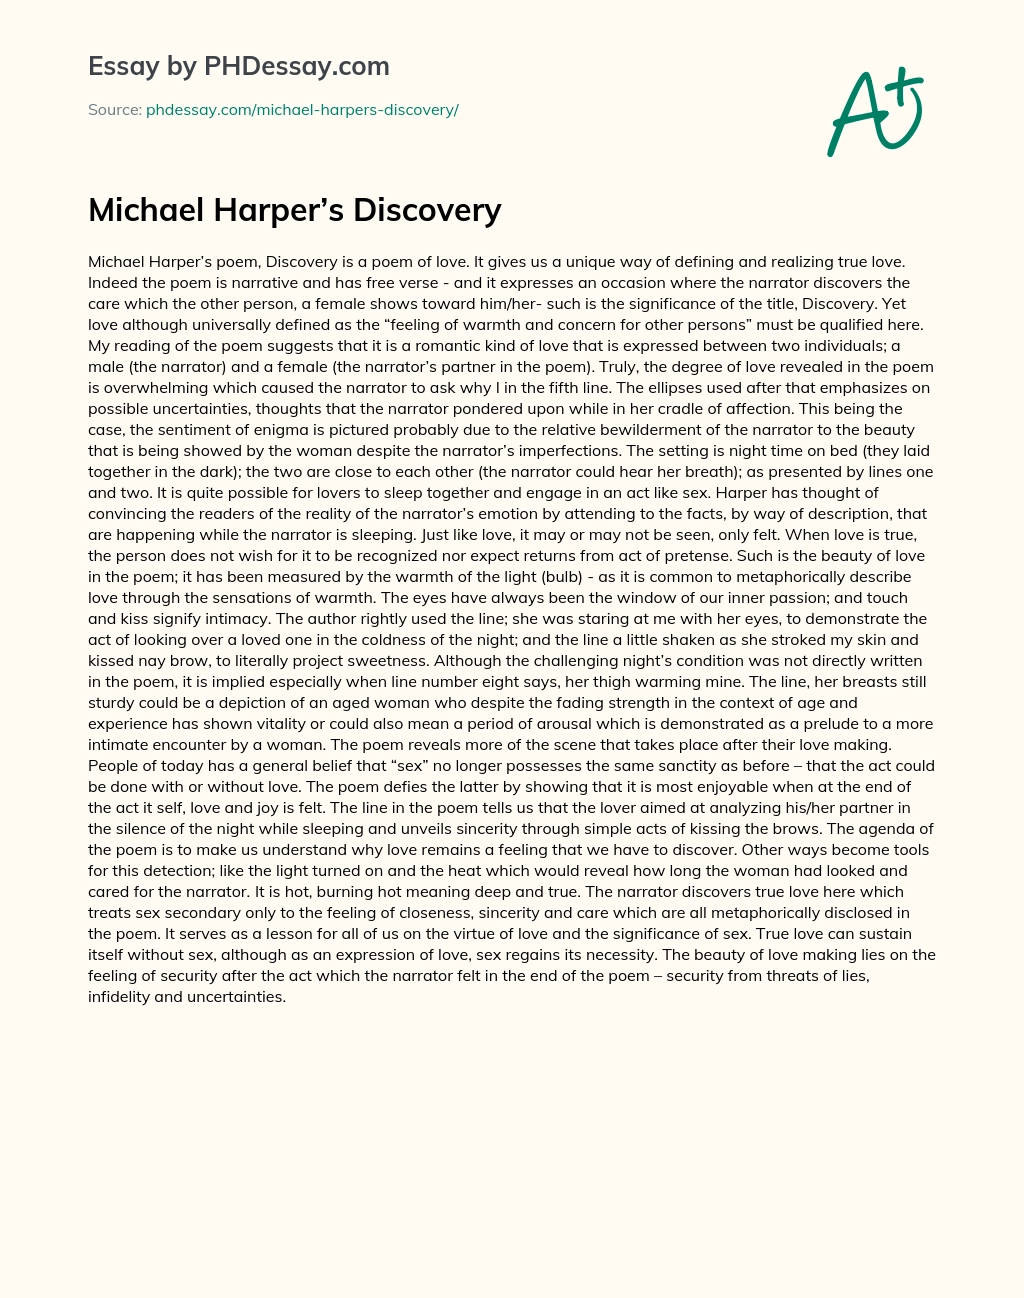 Michael Harper’s Discovery essay